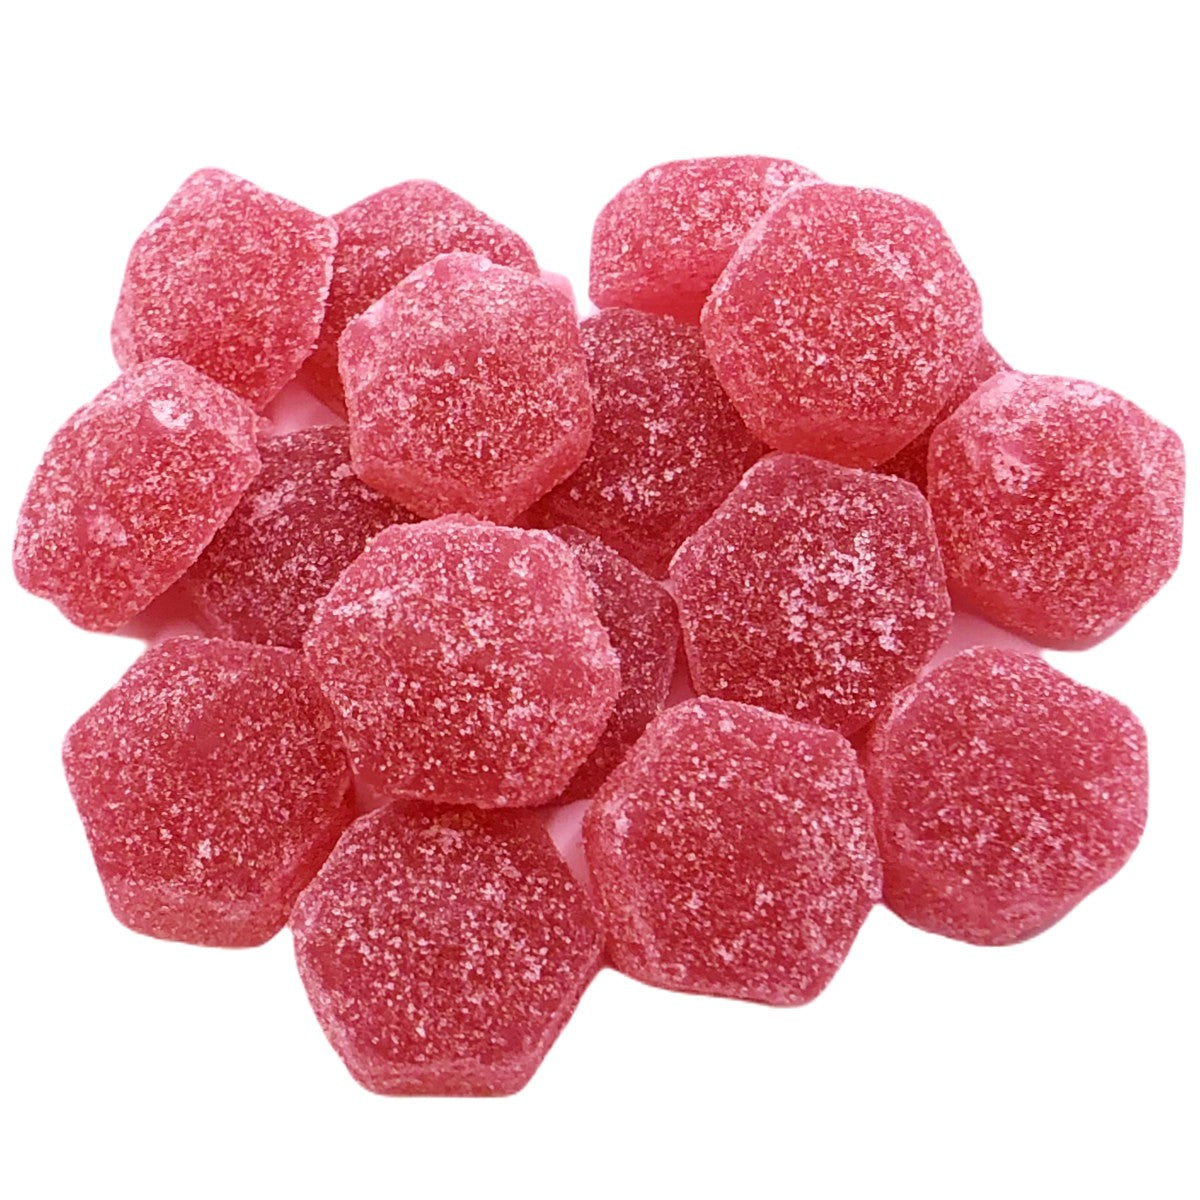 Grape Flavor Infused Gummies | Delta 9 + CBD Edibles | 10PCS